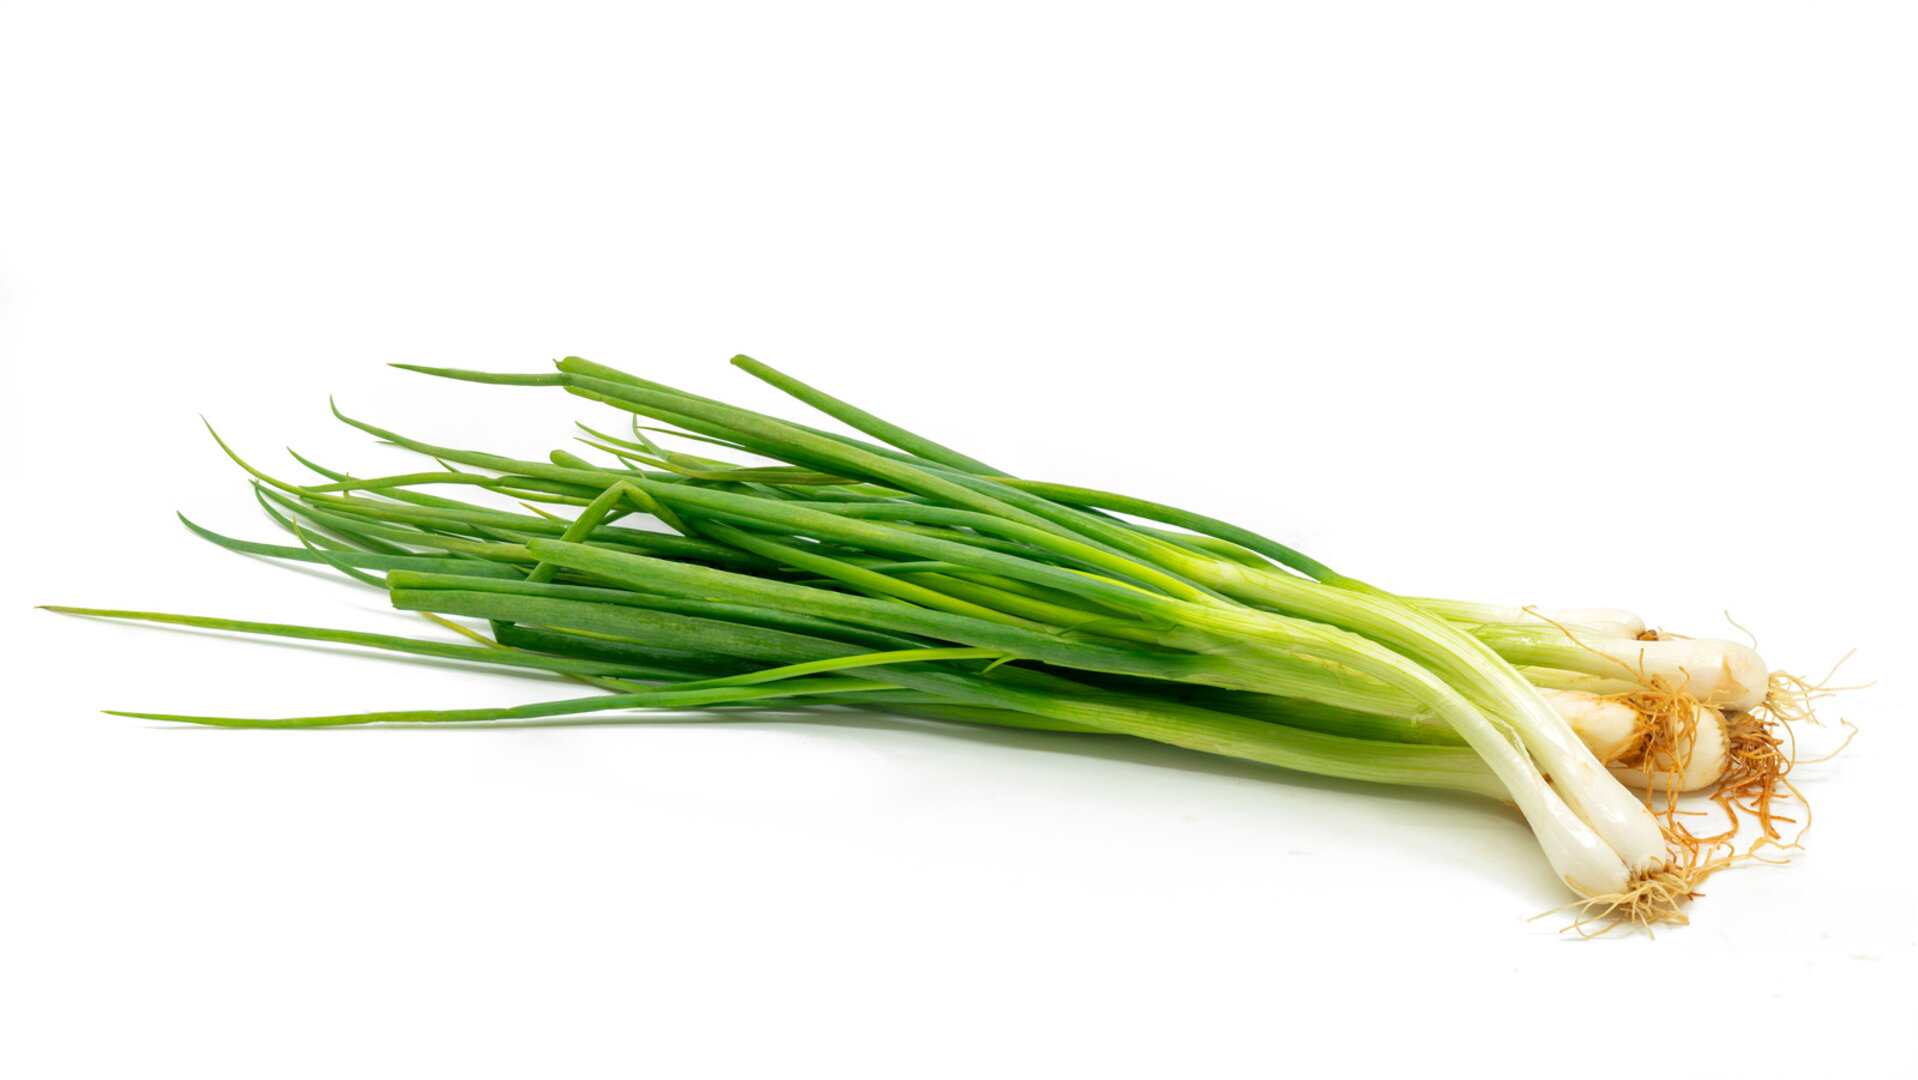 Onion green 1 kg